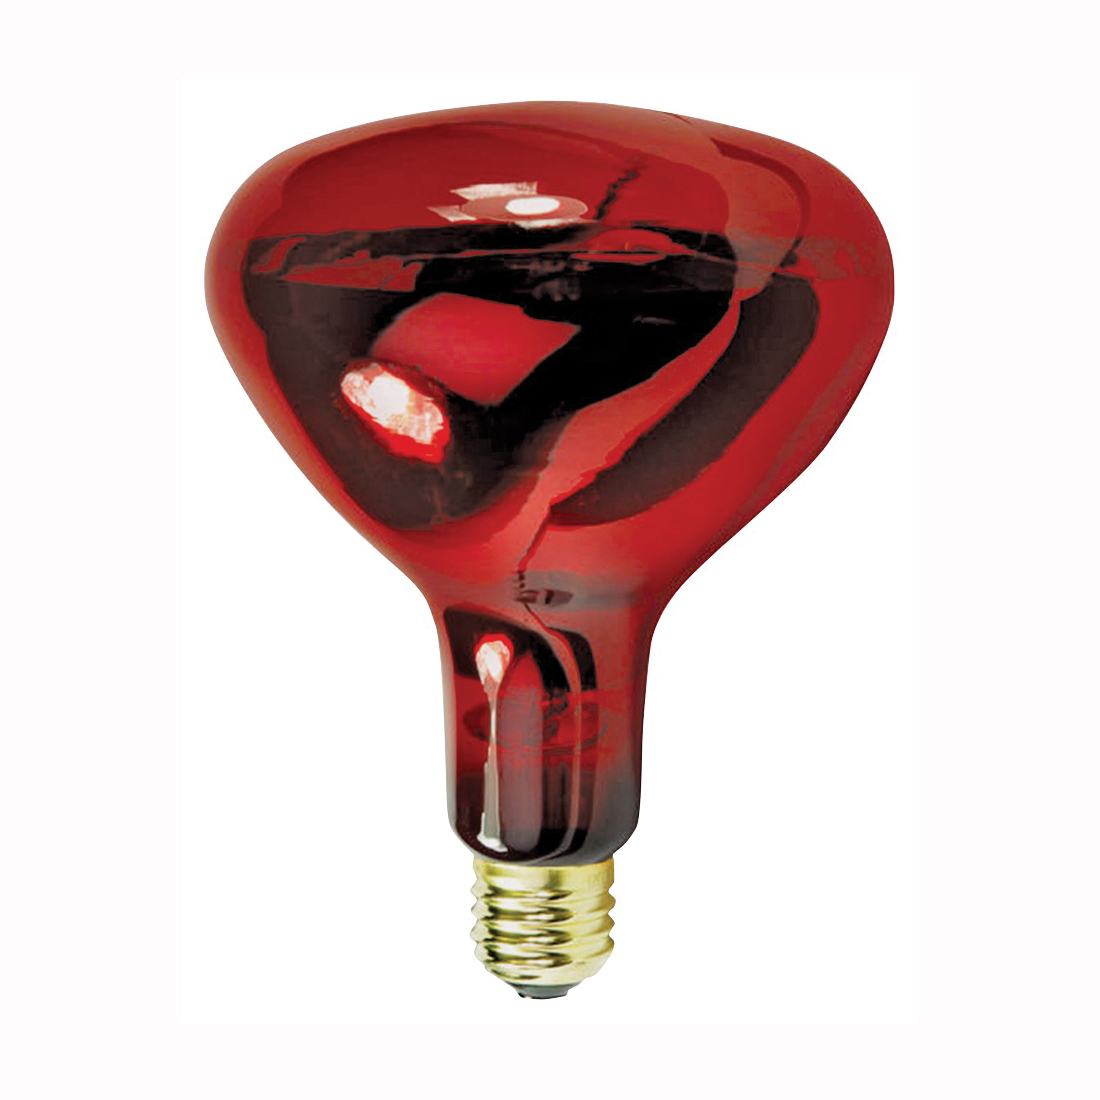 250R40/10 Incandescent Lamp, 250 W, R40 Lamp, Medium E26 Lamp Base, Red Lamp, 2000 hr Average Life